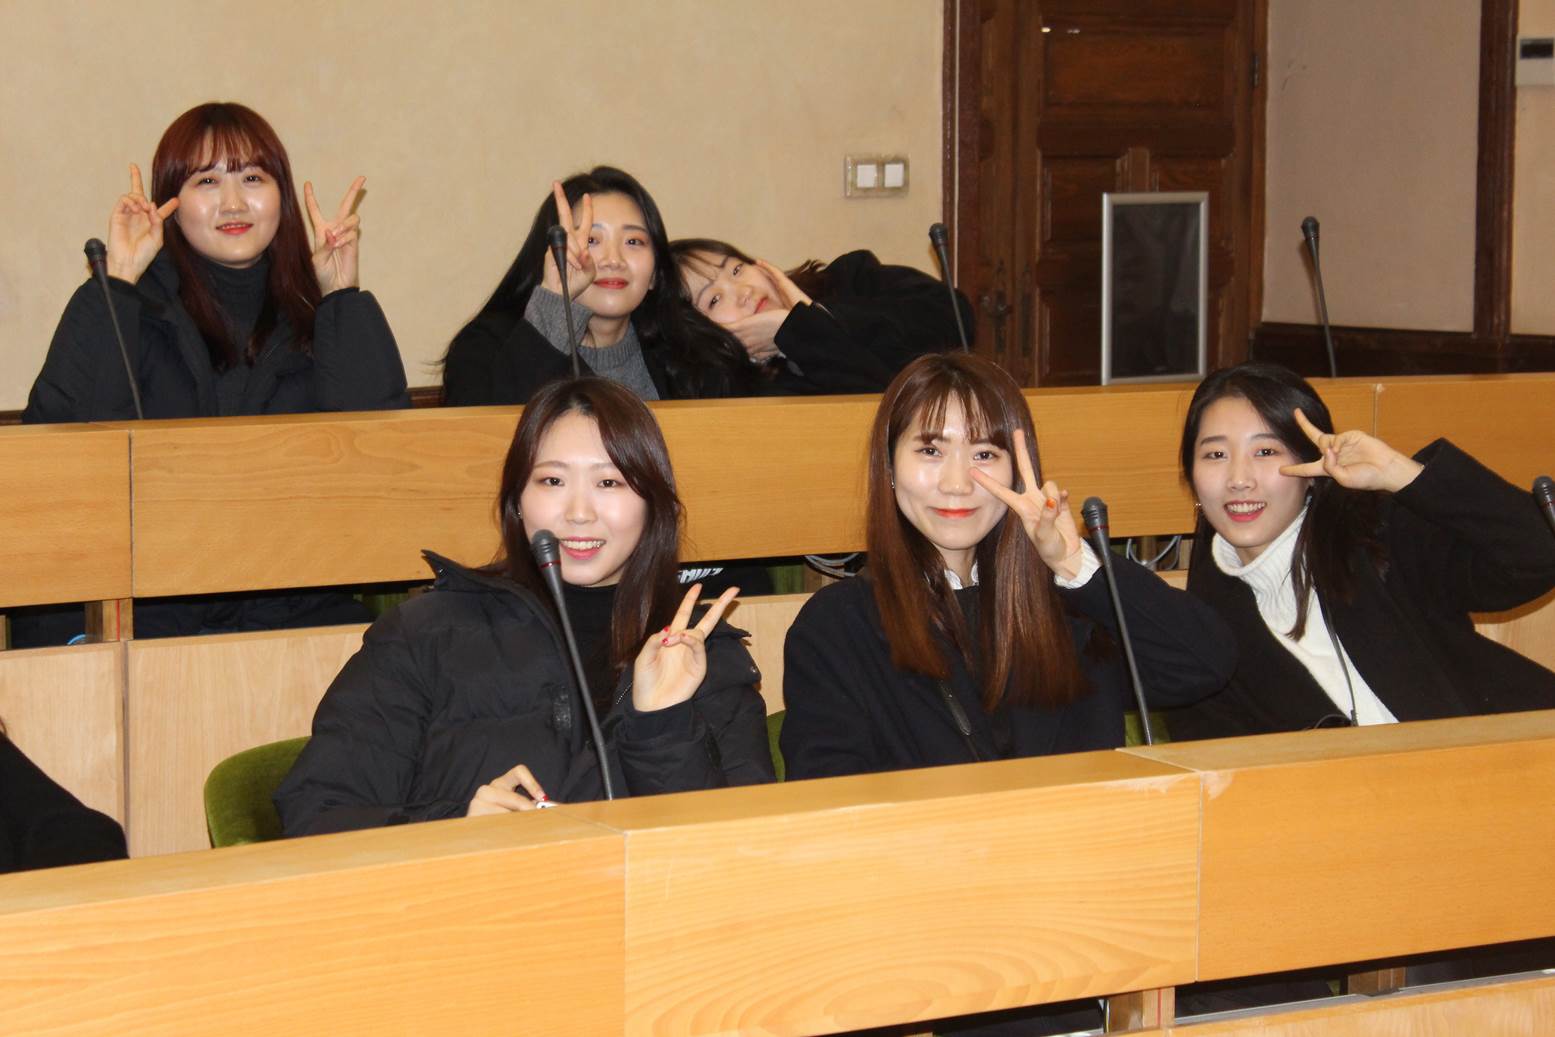 Closing ceremony (Gachon University Graduation, South Korea)